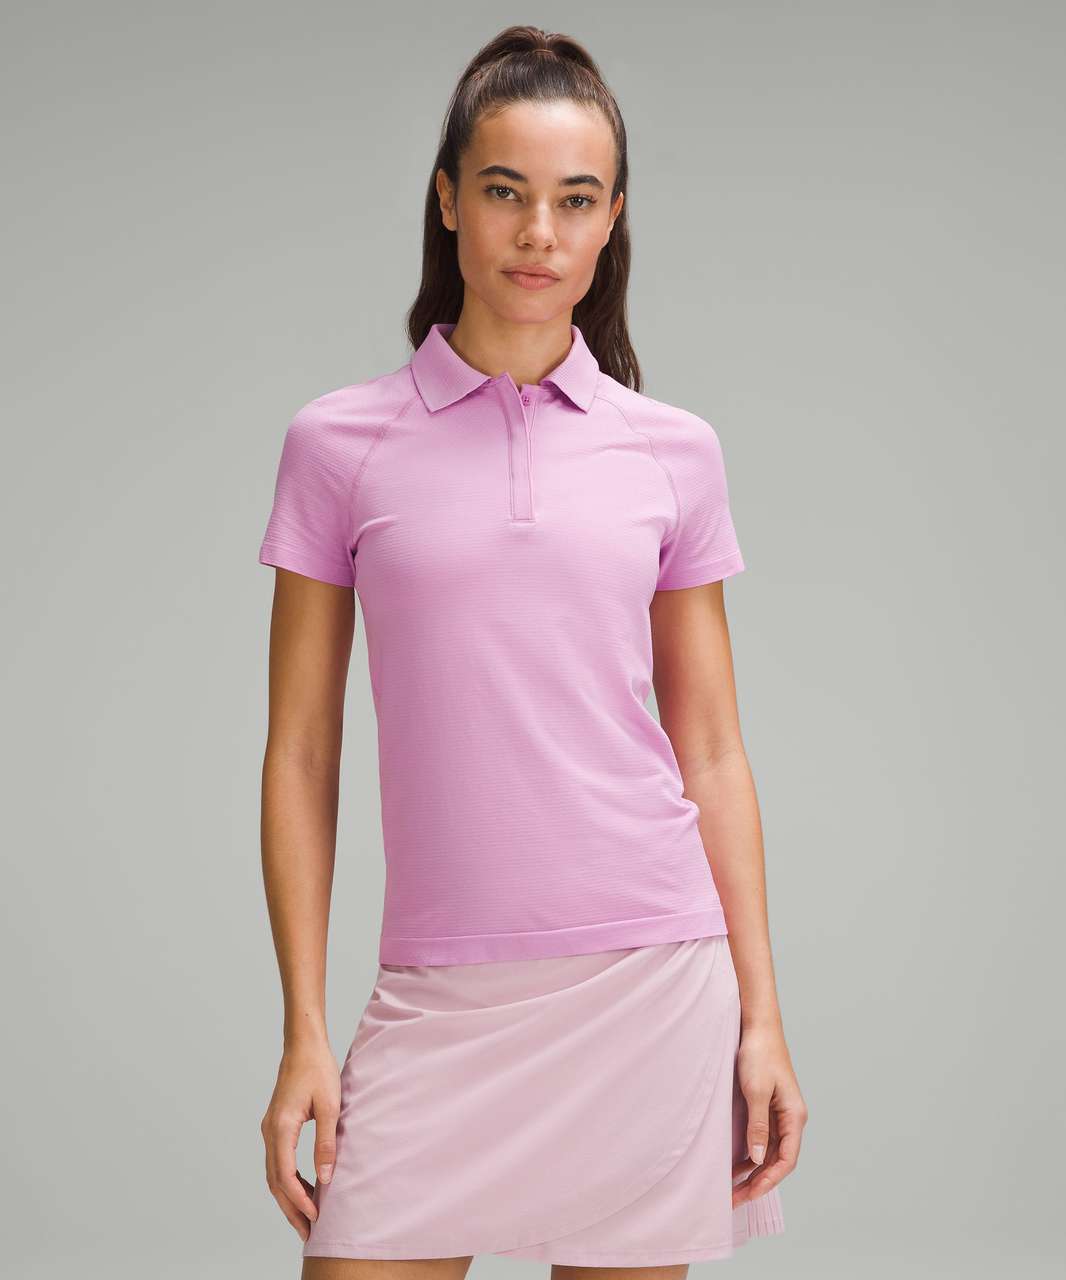 Lululemon Swiftly Tech Short-Sleeve Polo Shirt - Dahlia Mauve / Dahlia Mauve